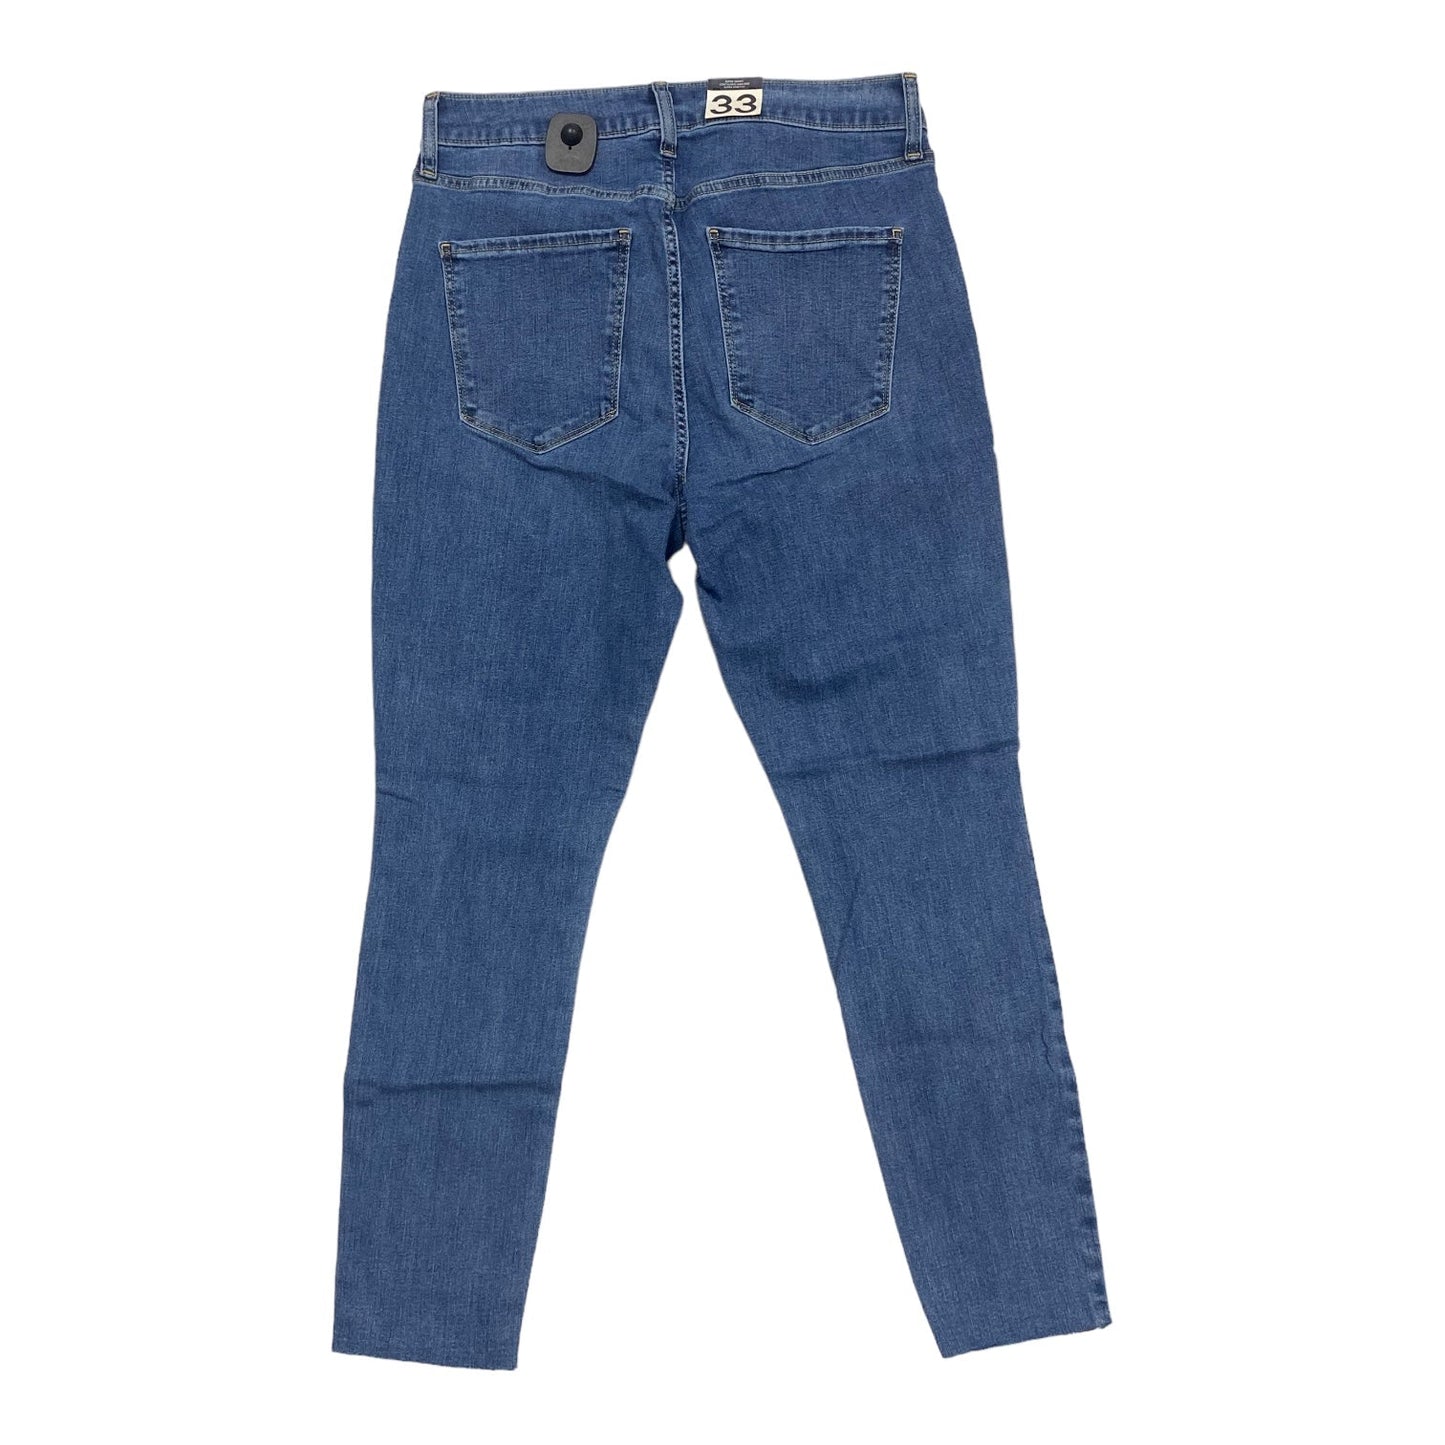 Blue Denim Jeans Jeggings Gap, Size 16